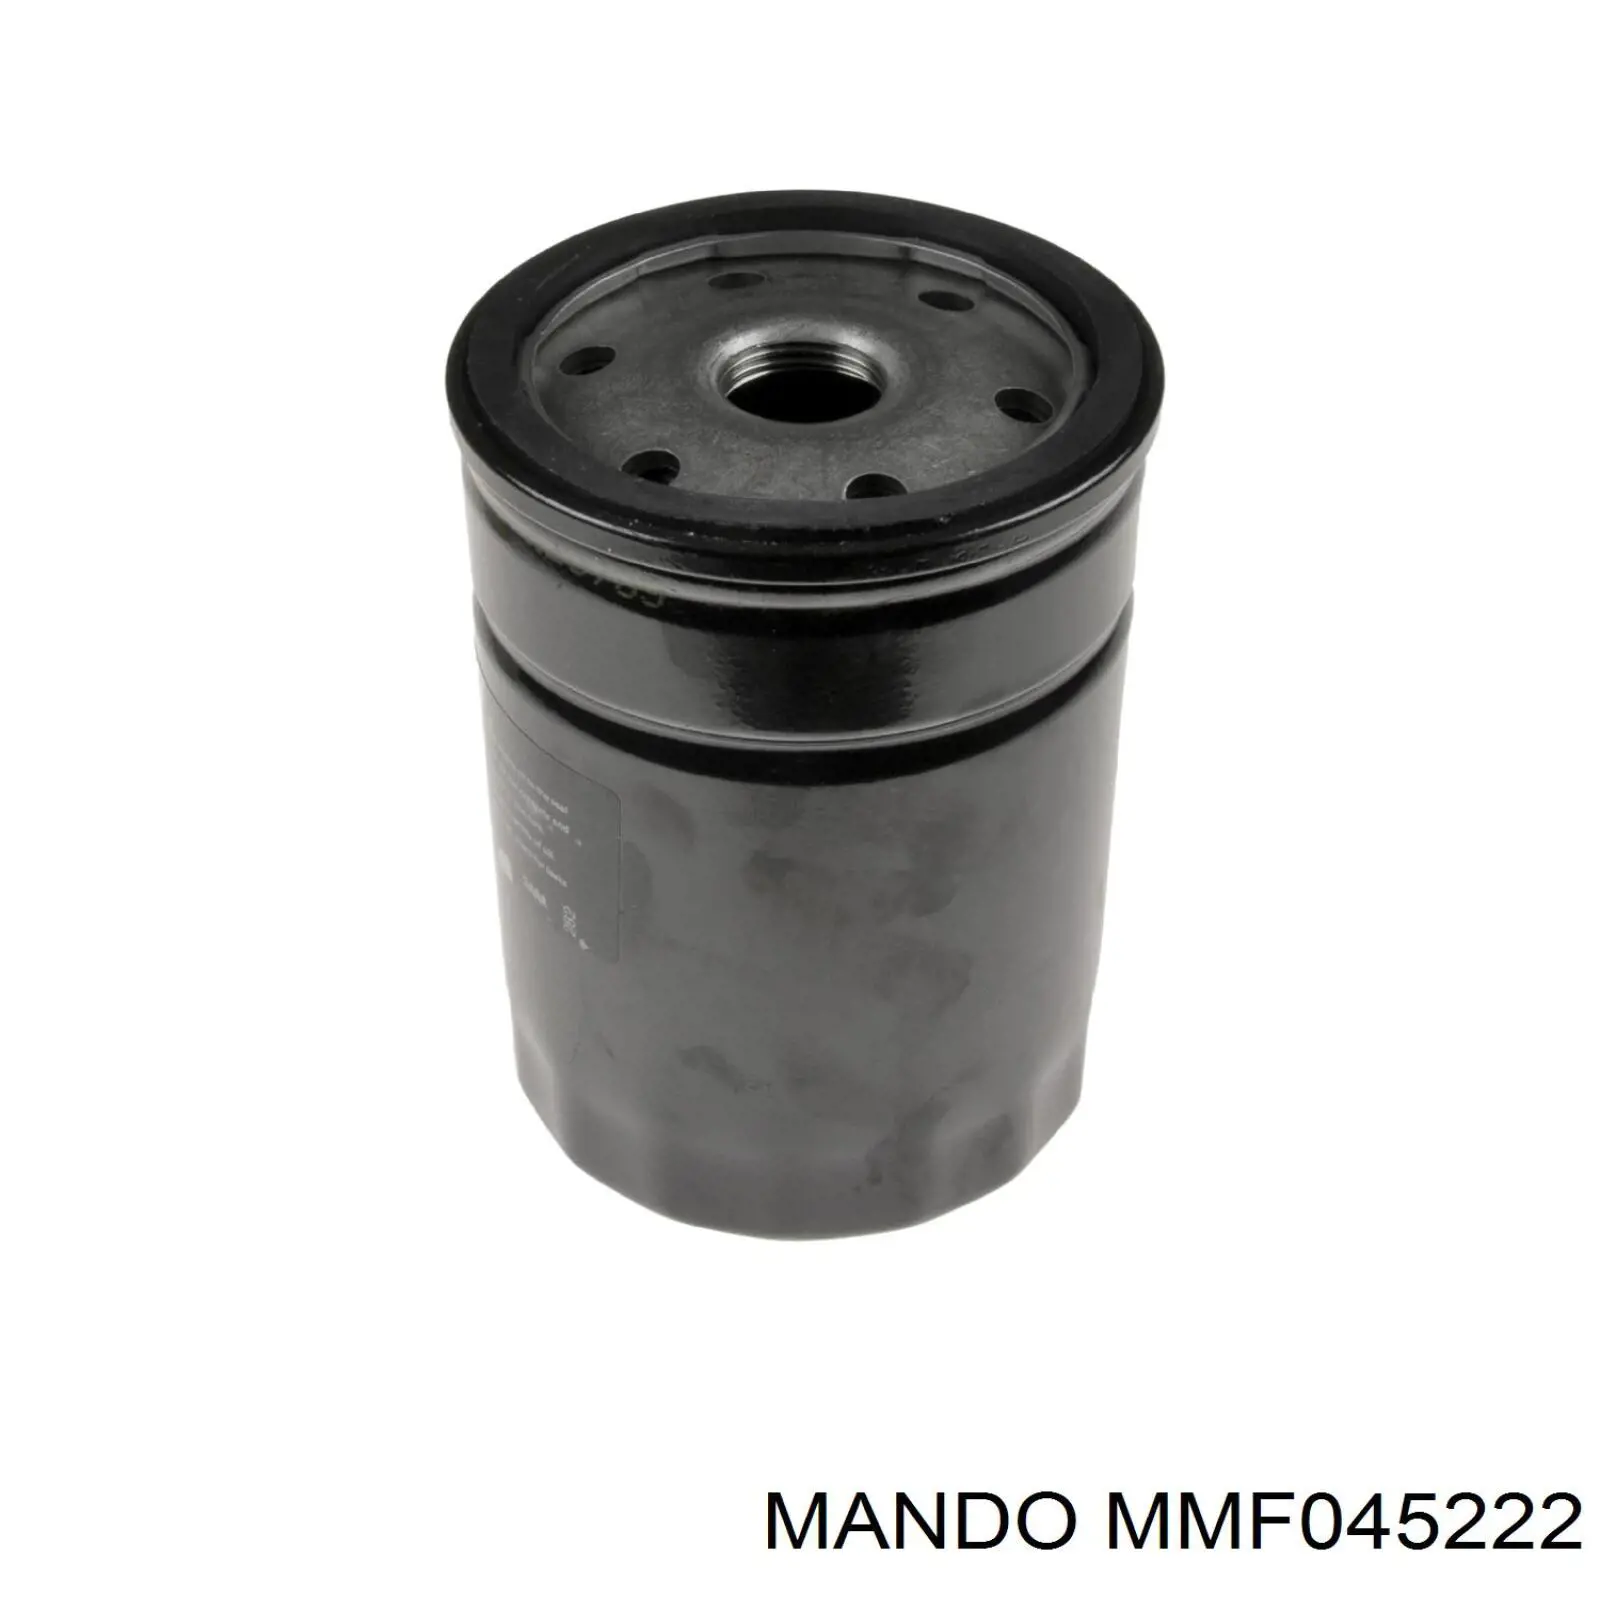 MMF045222 Mando filtro de aceite